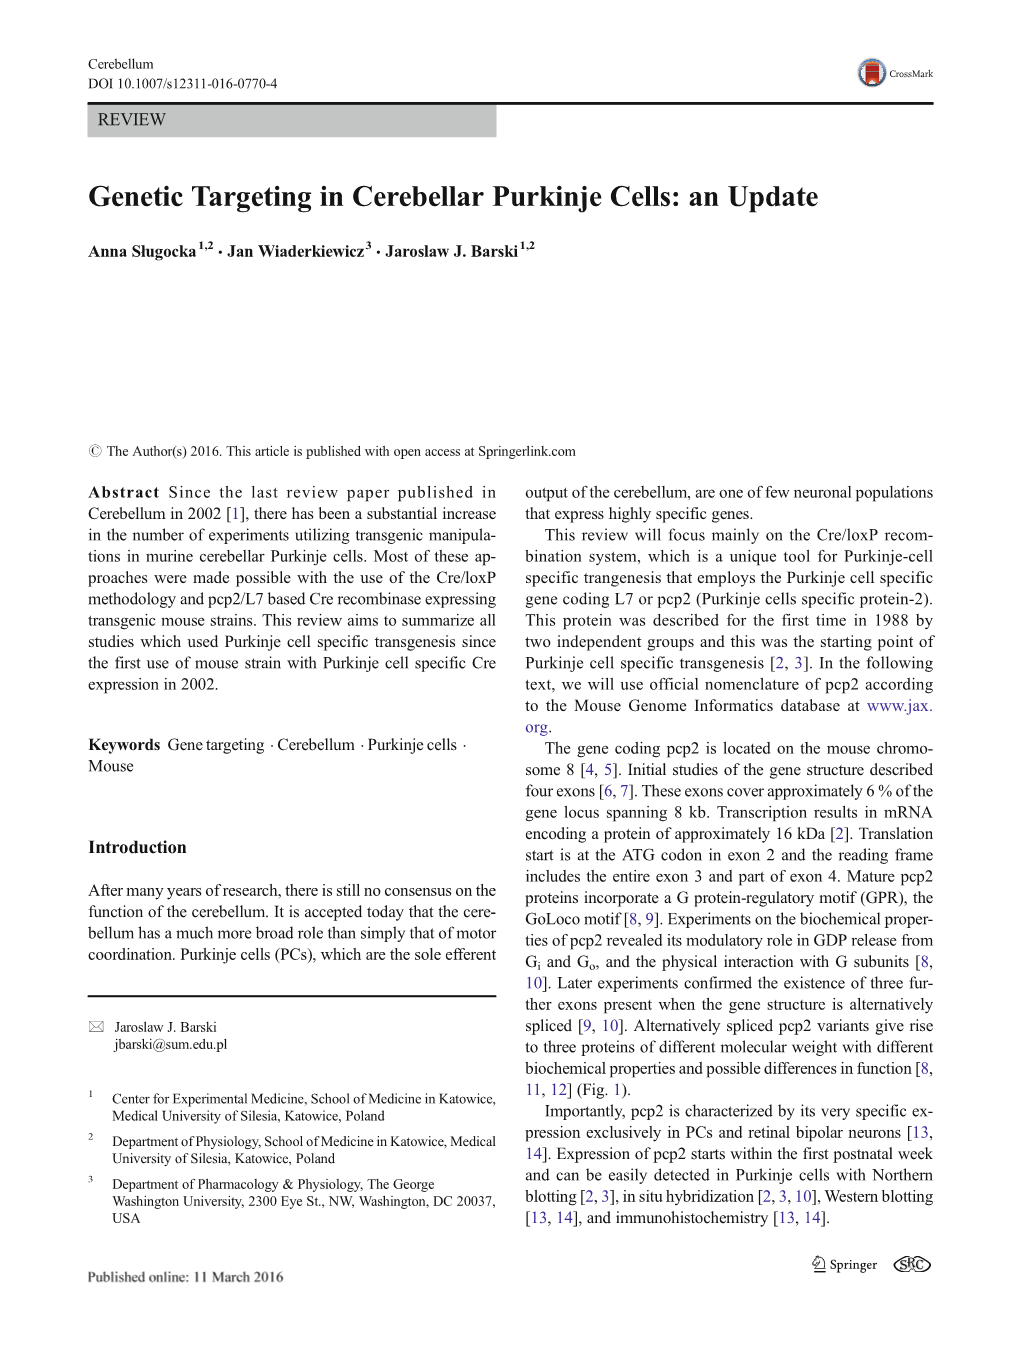 Genetic Targeting in Cerebellar Purkinje Cells: an Update